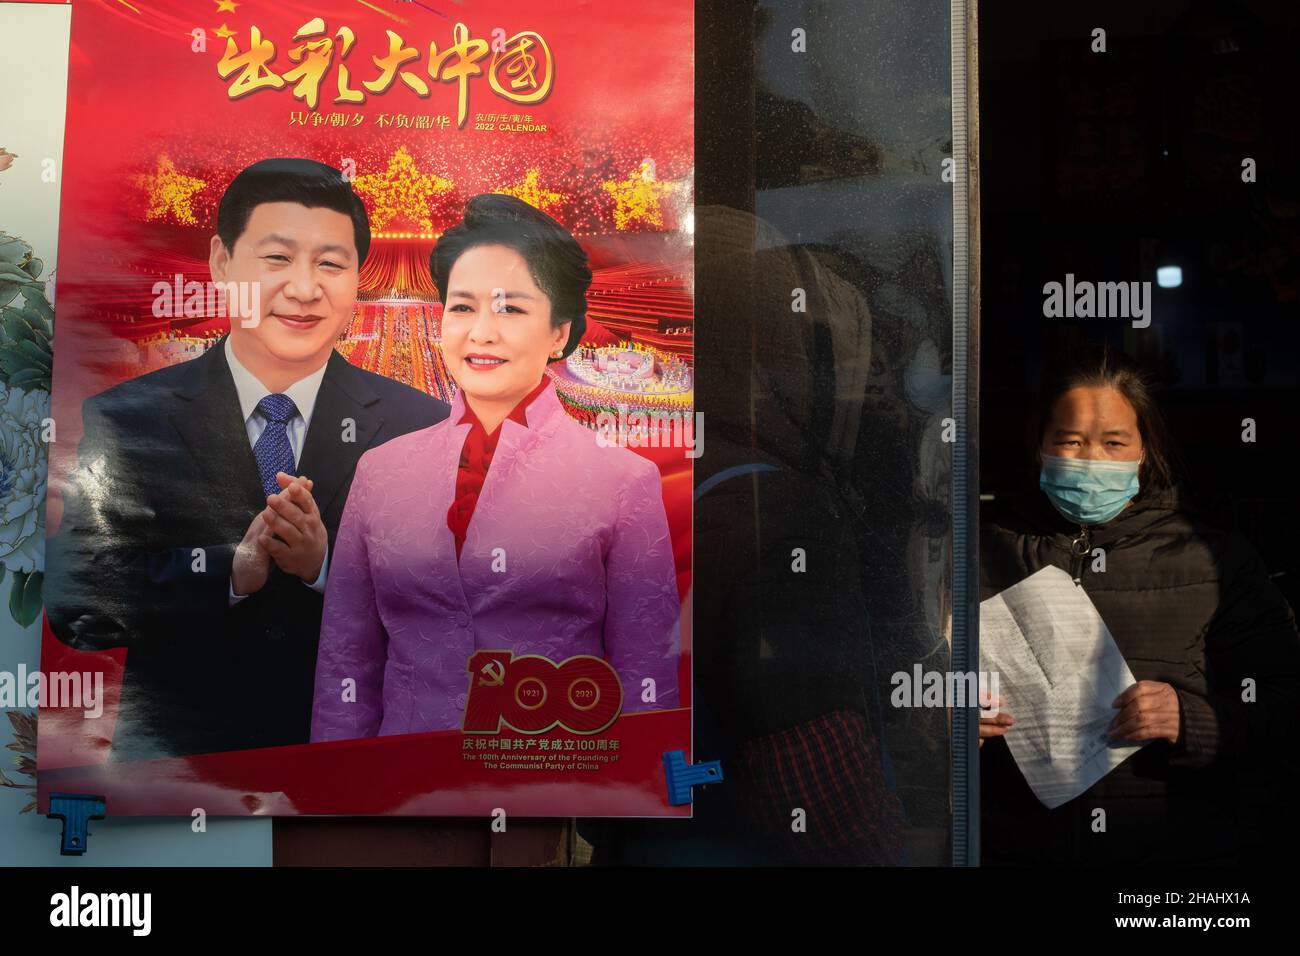 Wandkalender 2022 mit Fotos des chinesischen Präsidenten Xi Jinping und seiner Frau Peng Liyuan als Deckblatt. Stockfoto